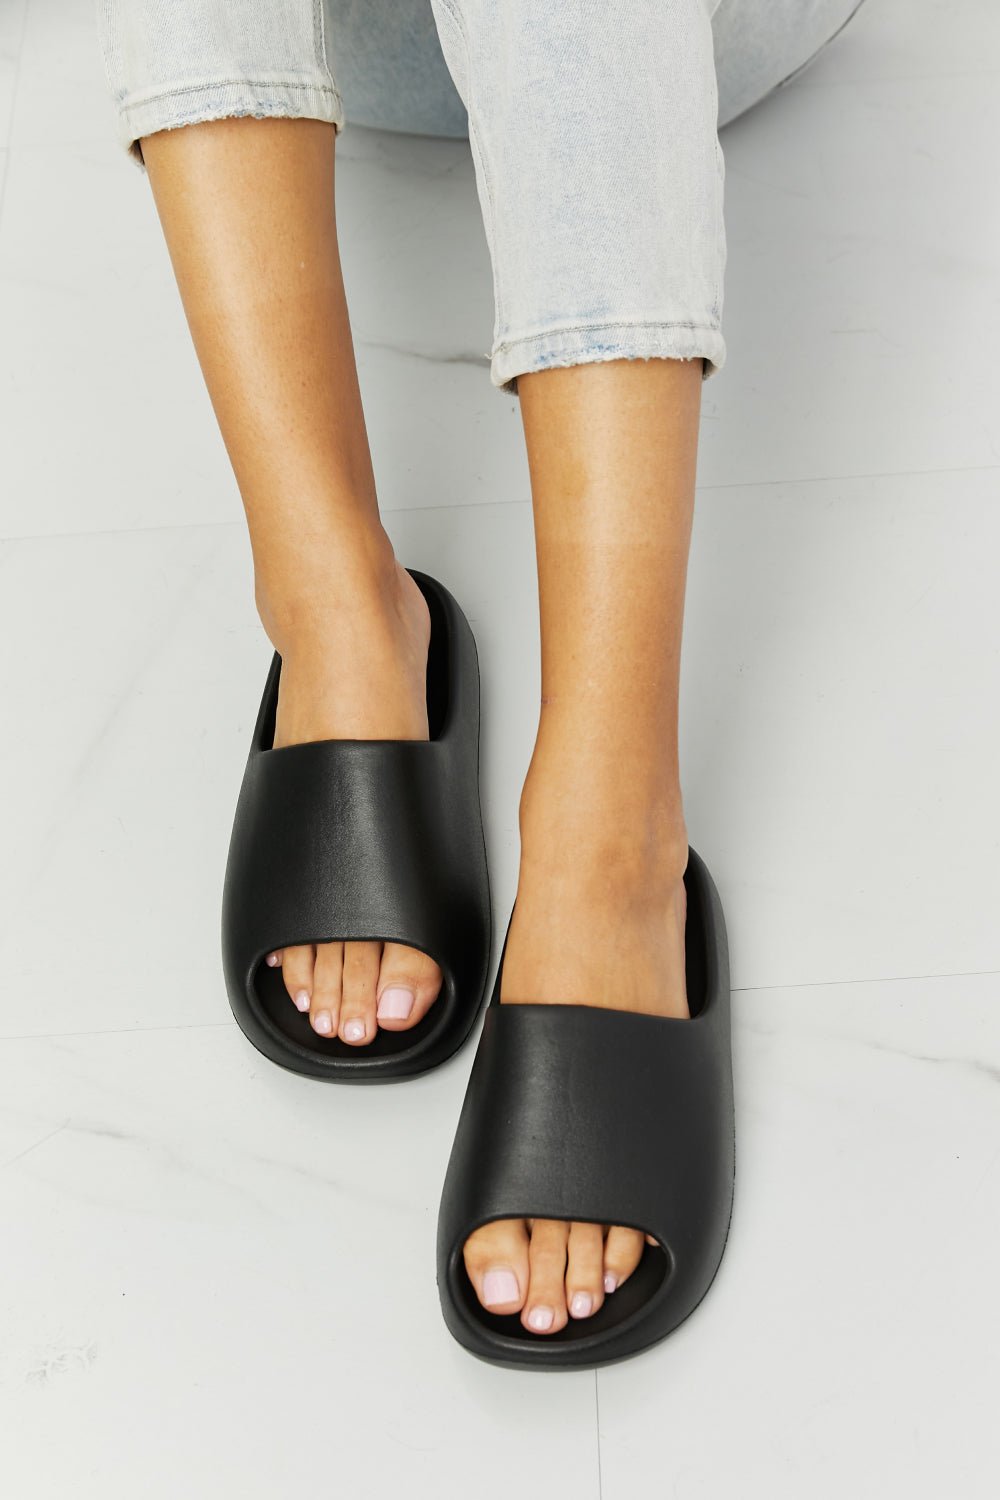 Open Toe Rubber Slide Sandals in BlackSlidesNOOK JOI